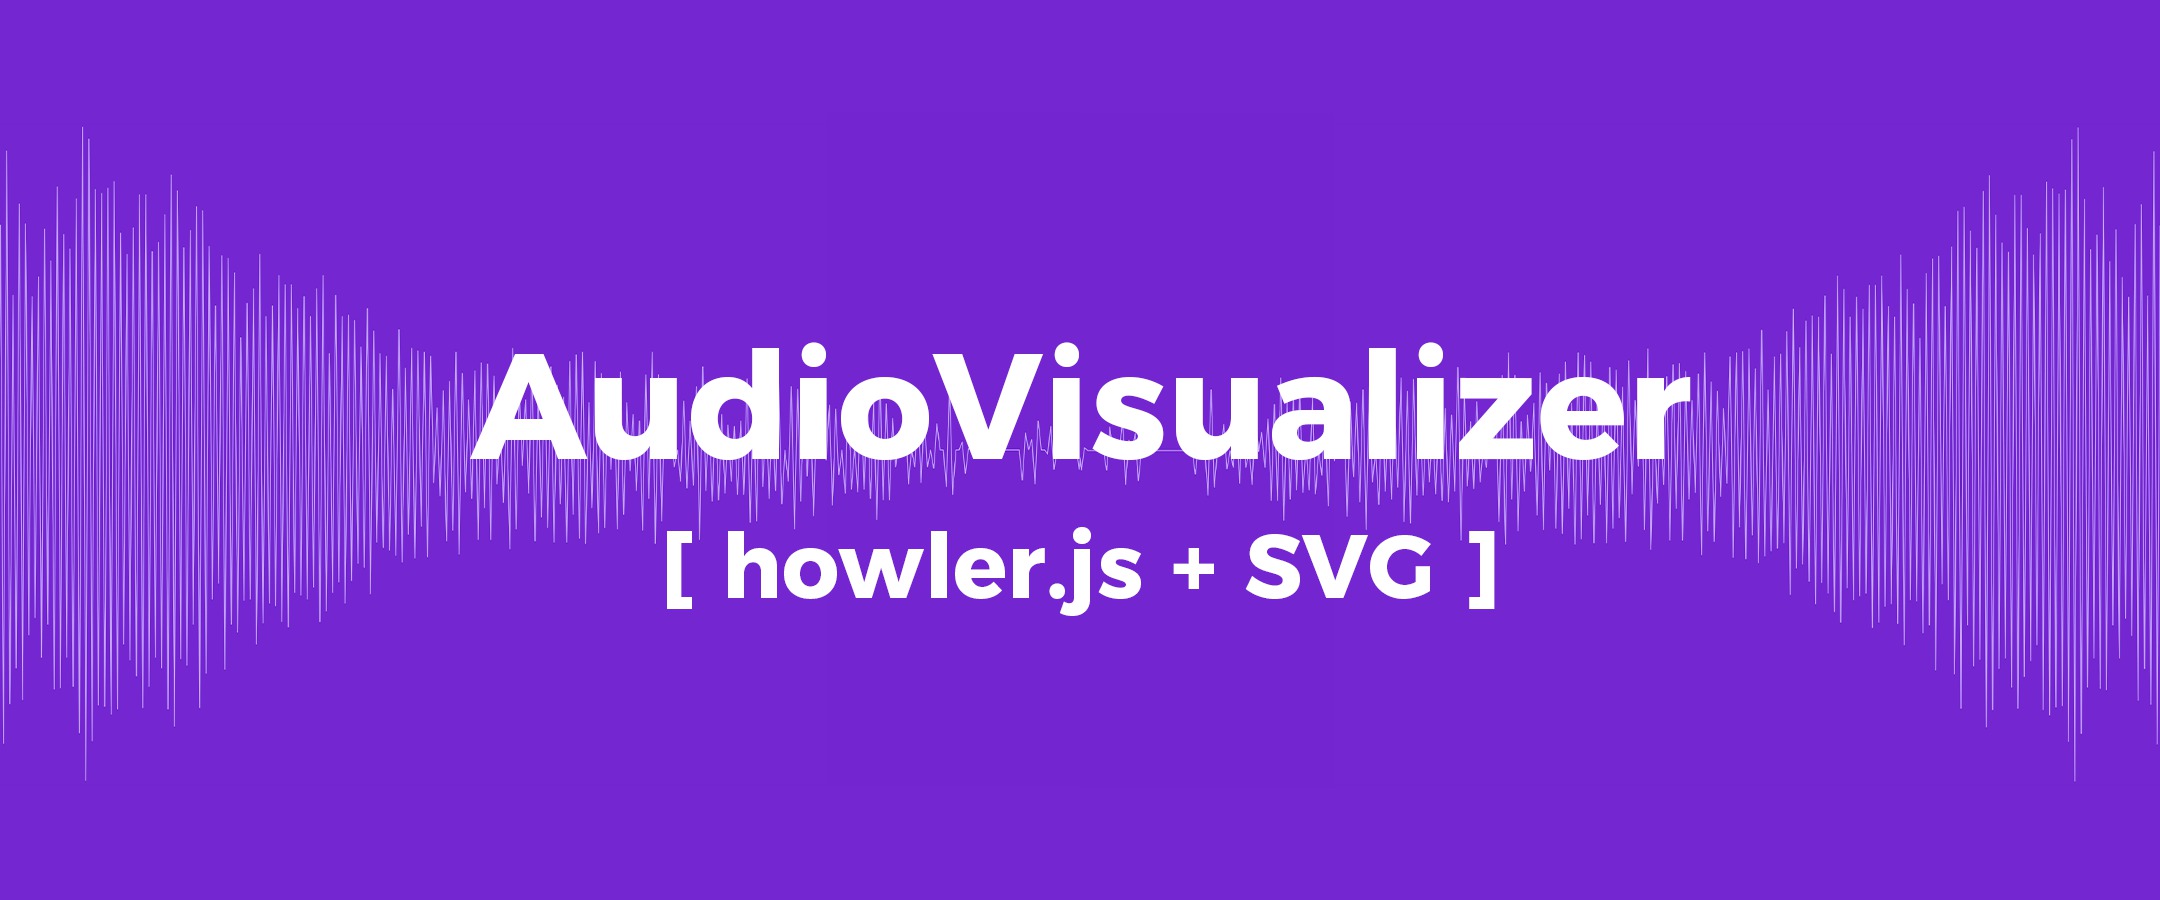 【howler.js】ストリーミング音源からオーディオビジュアライザーを作る